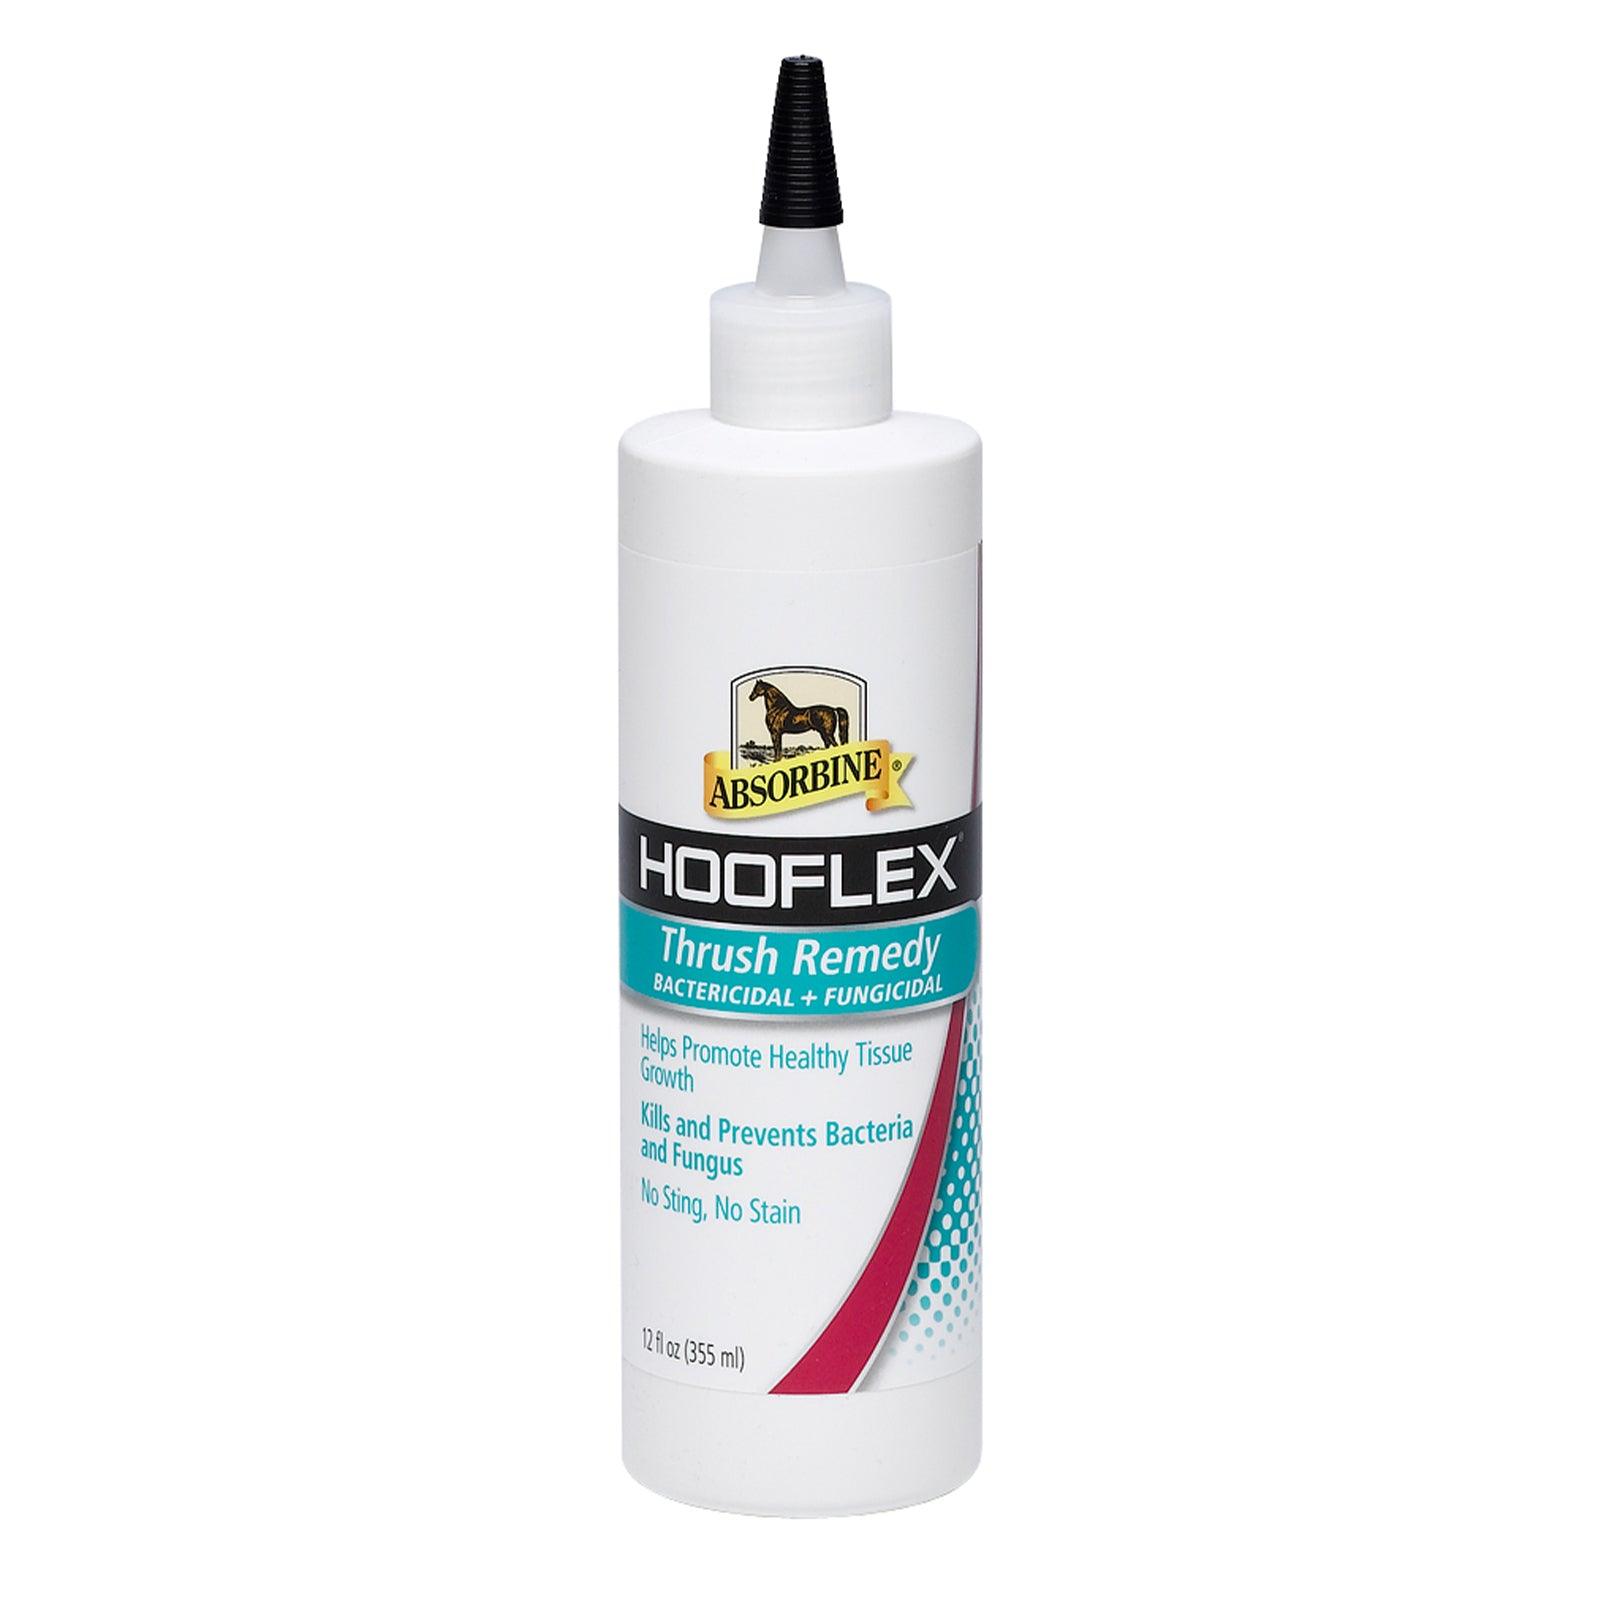 Hooflex® Thrush Remedy Hoof Care absorbine   